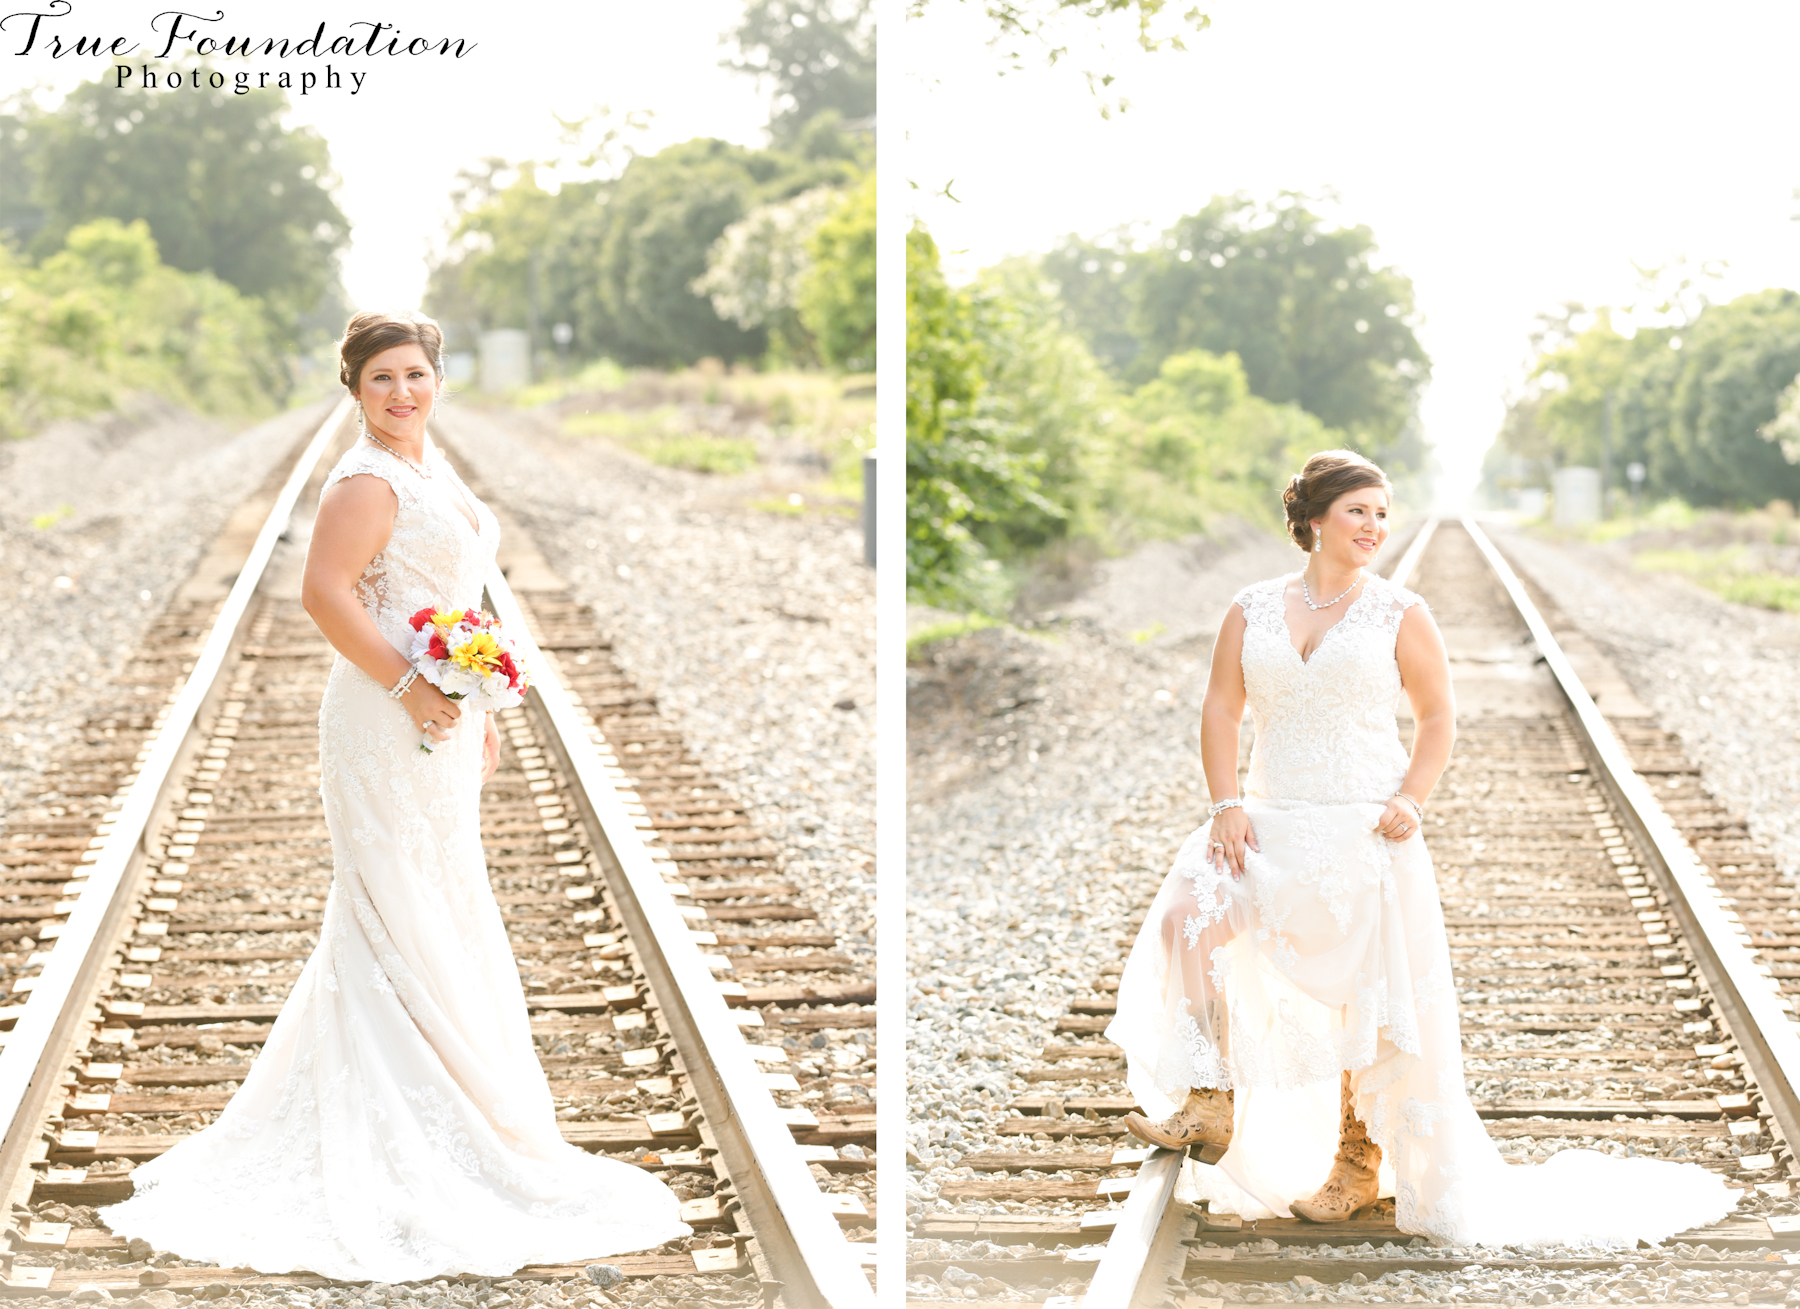 Bridal - Portrait - Photography - Photos - Hendersonville - NC - Shelby - Photographers - Farm - Country - Pinterest - Bride (13)